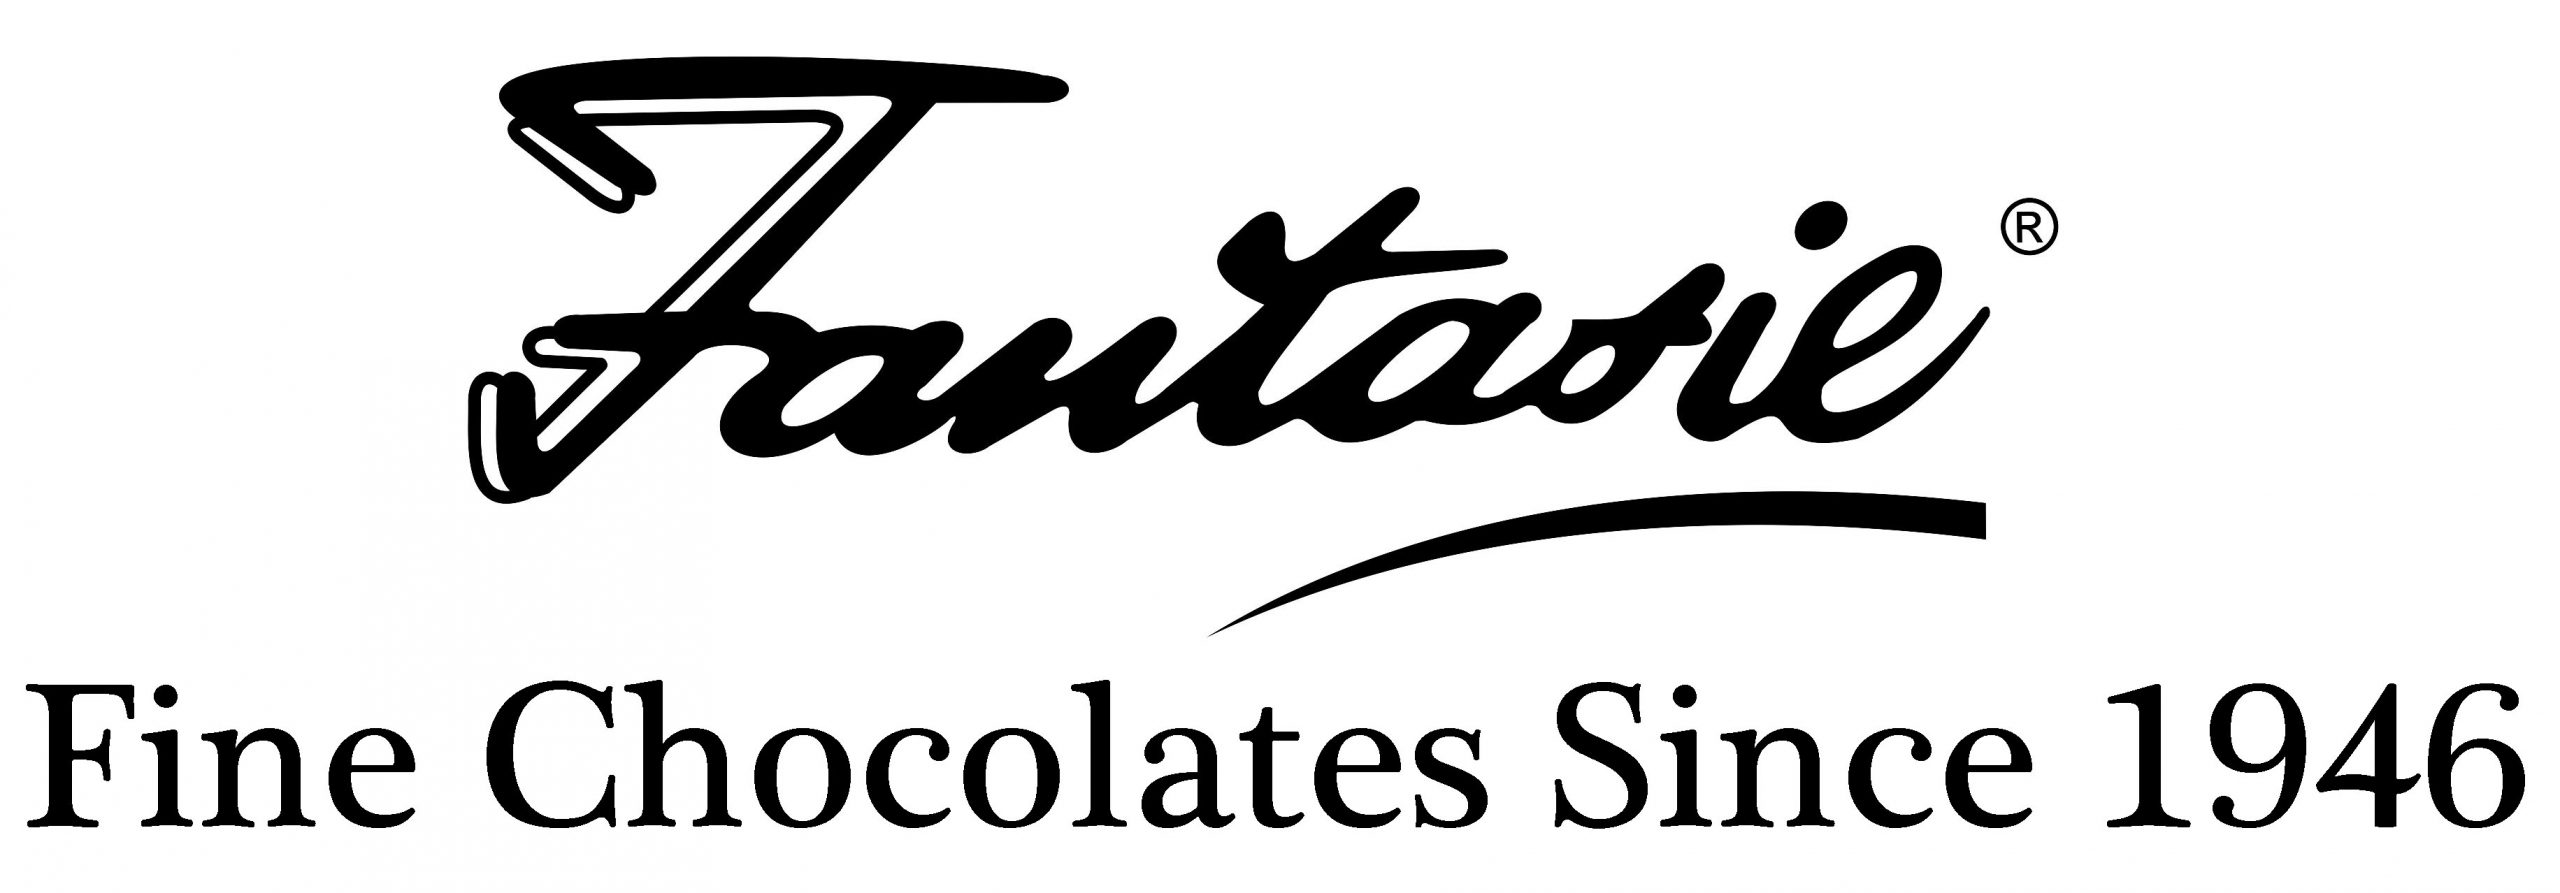 Fantasie Chocolate